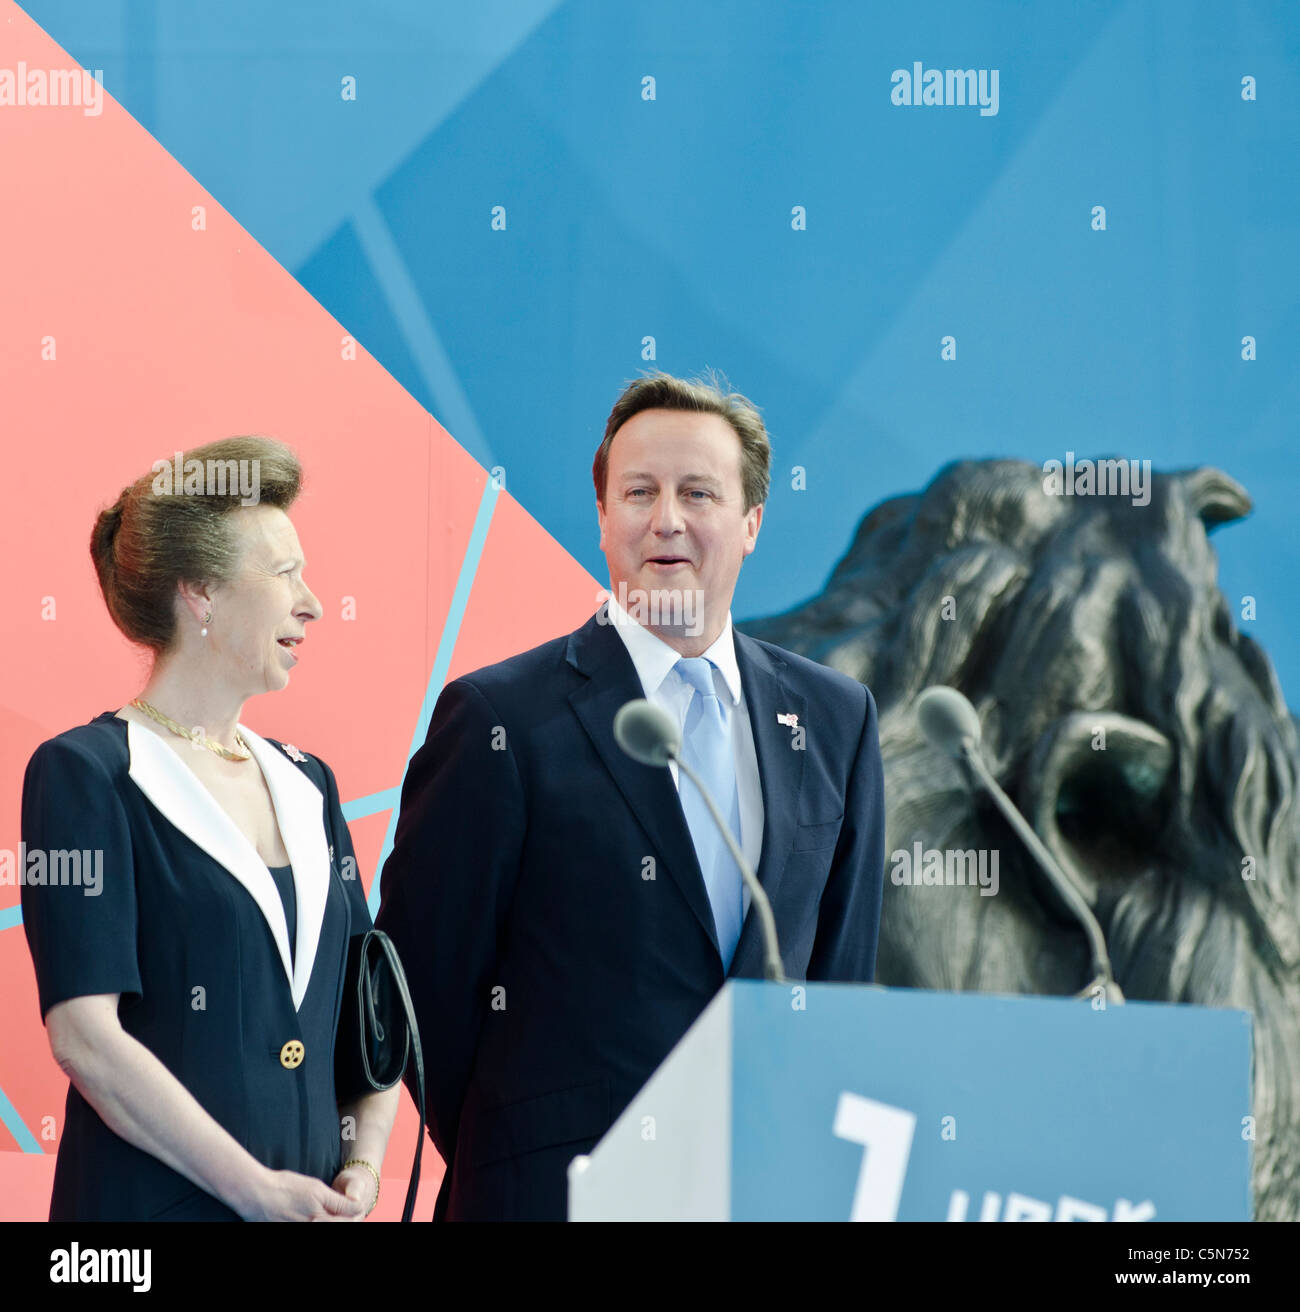 Princess Royal (Prinzessin Anne), David Cameron britische Premierminister "1 Jahr vor" London 2012 Olympics Trafalgar Square Stockfoto